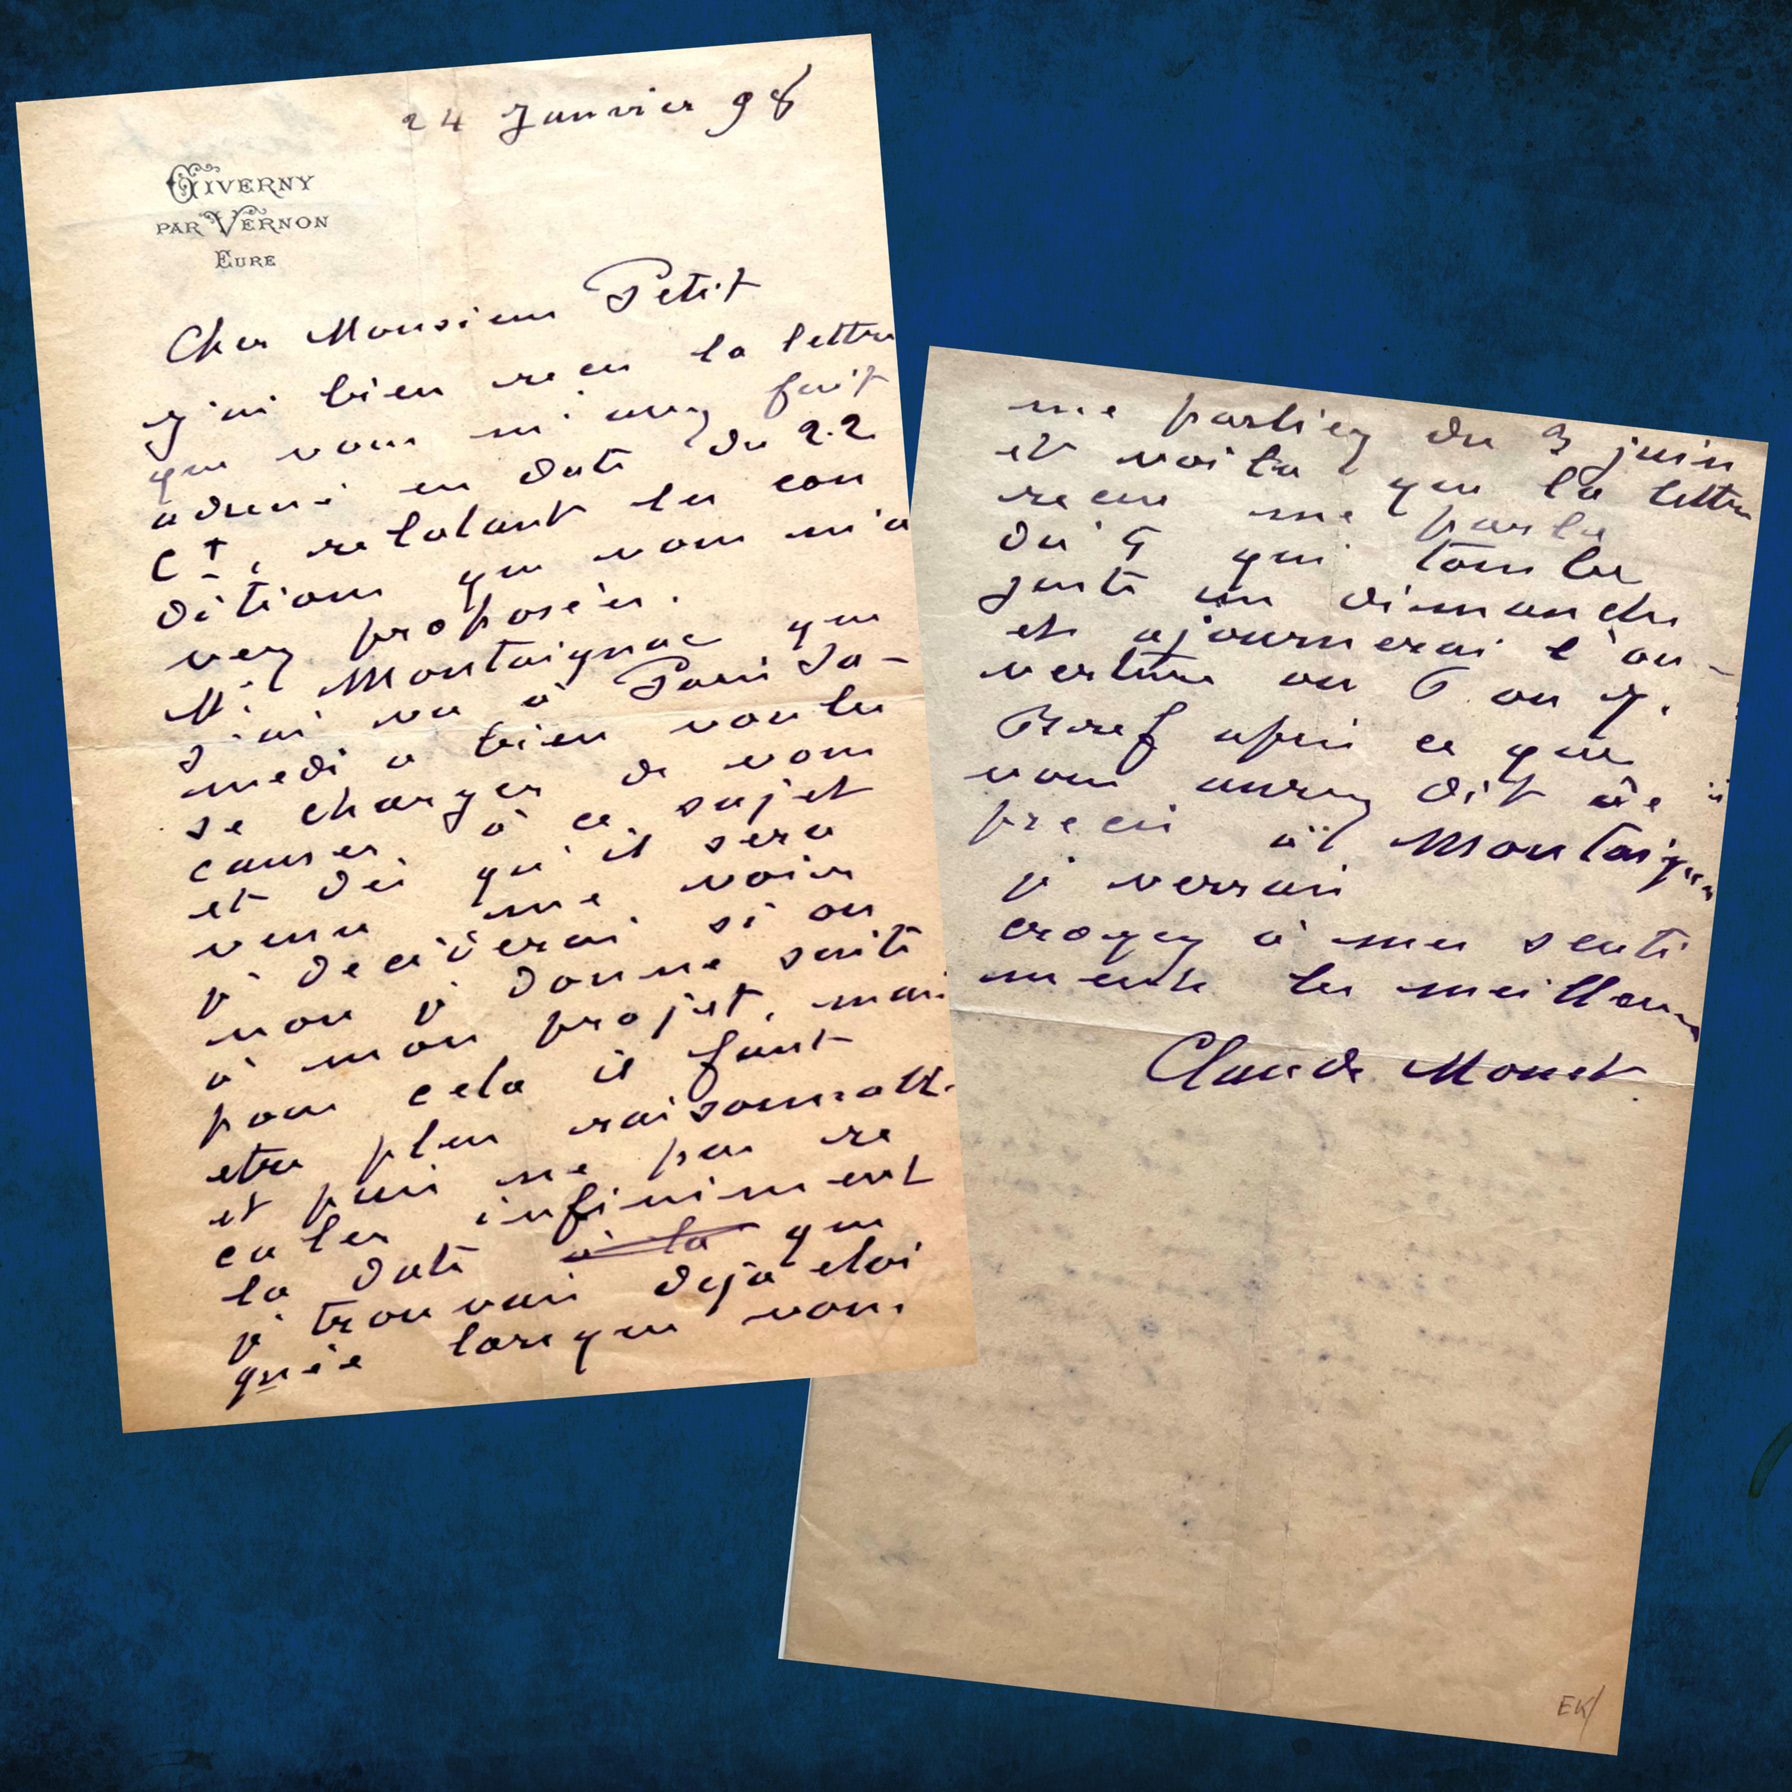 Claude Monet’s letter to George Petit